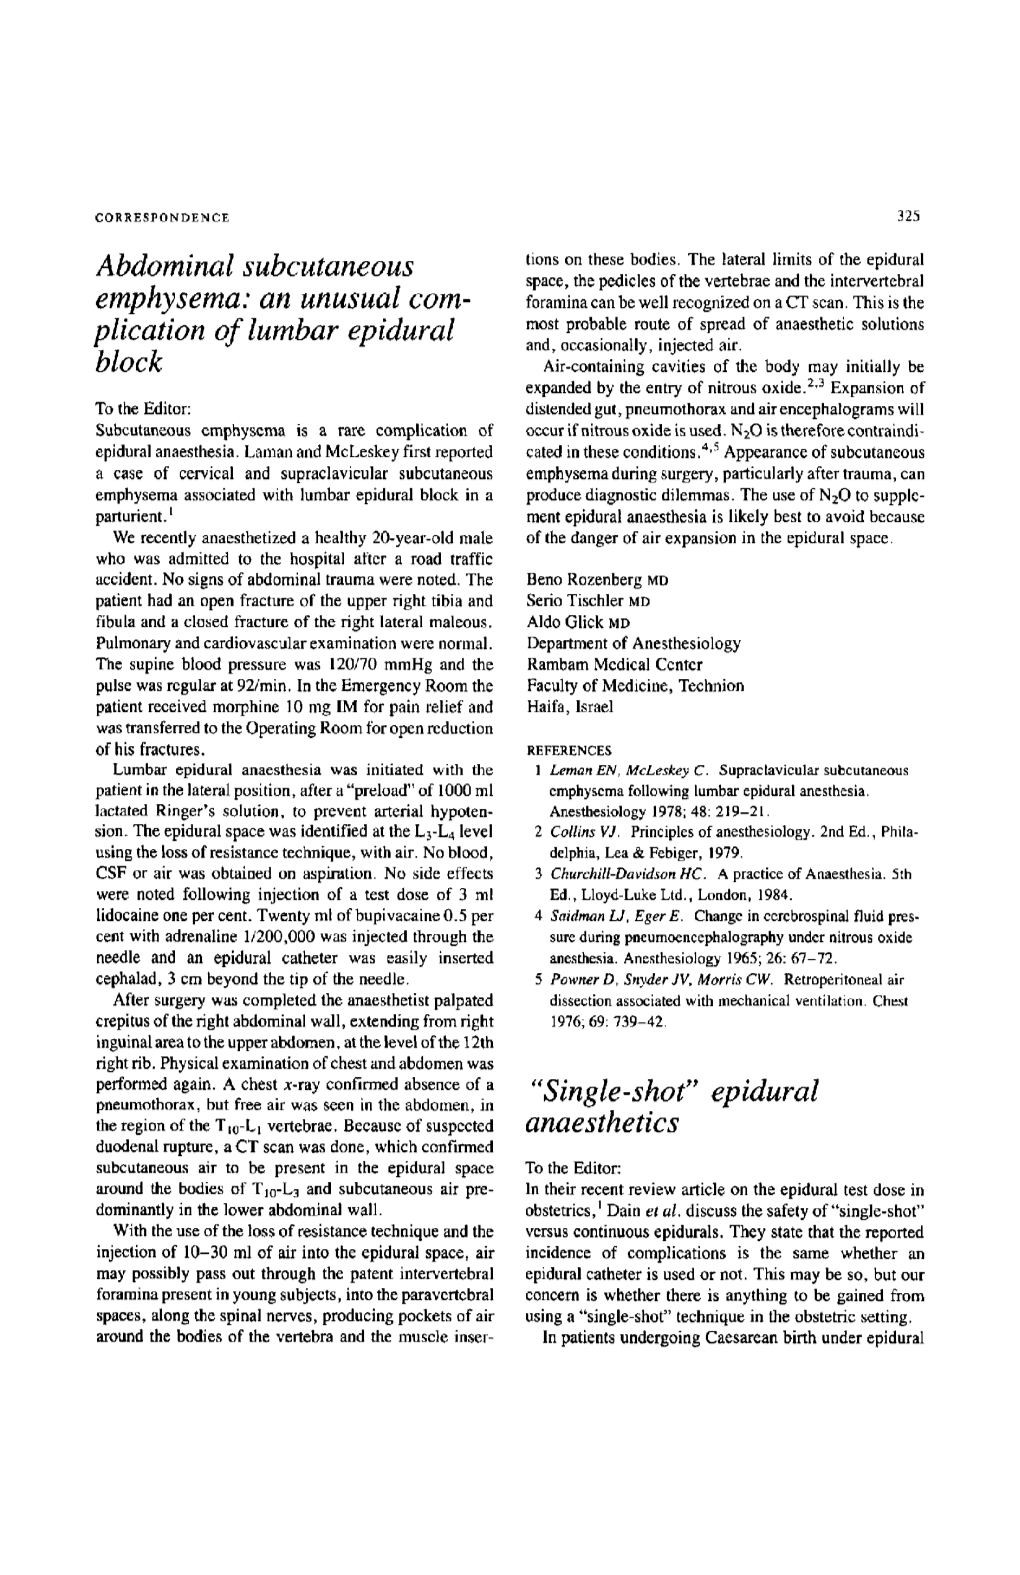 Abdominal Subcutaneous Emphysema: an Unusual Complication of Lumbar